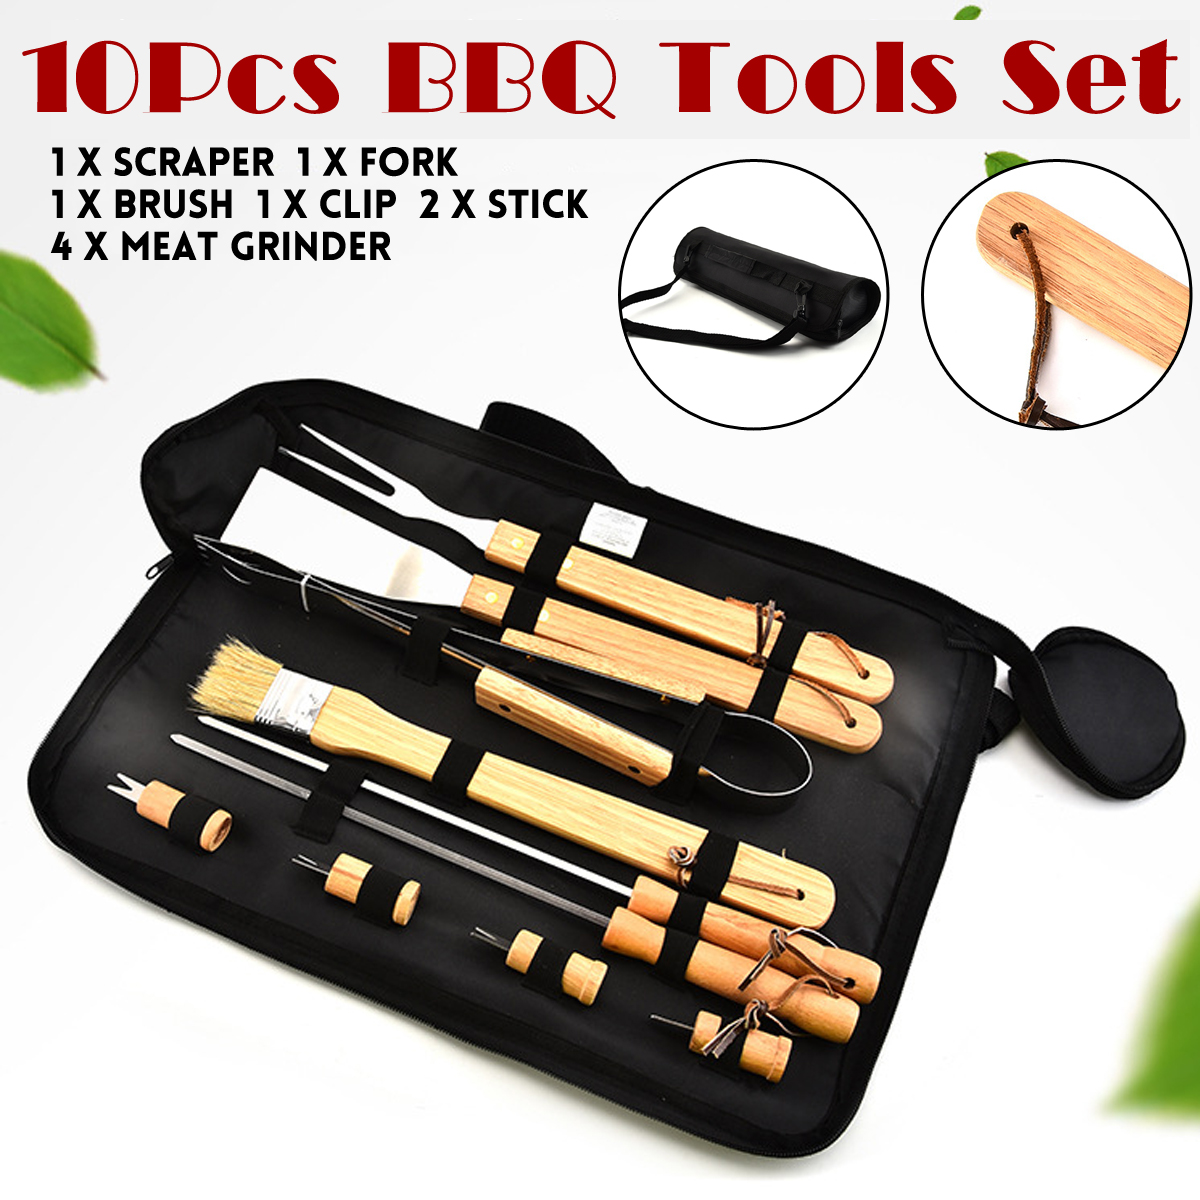 10Pcs-BBQ-Tools-Set-BarbecueGrilling-Utensil-Kit-Scraper-Fork-Brush-Clip-1809121-1